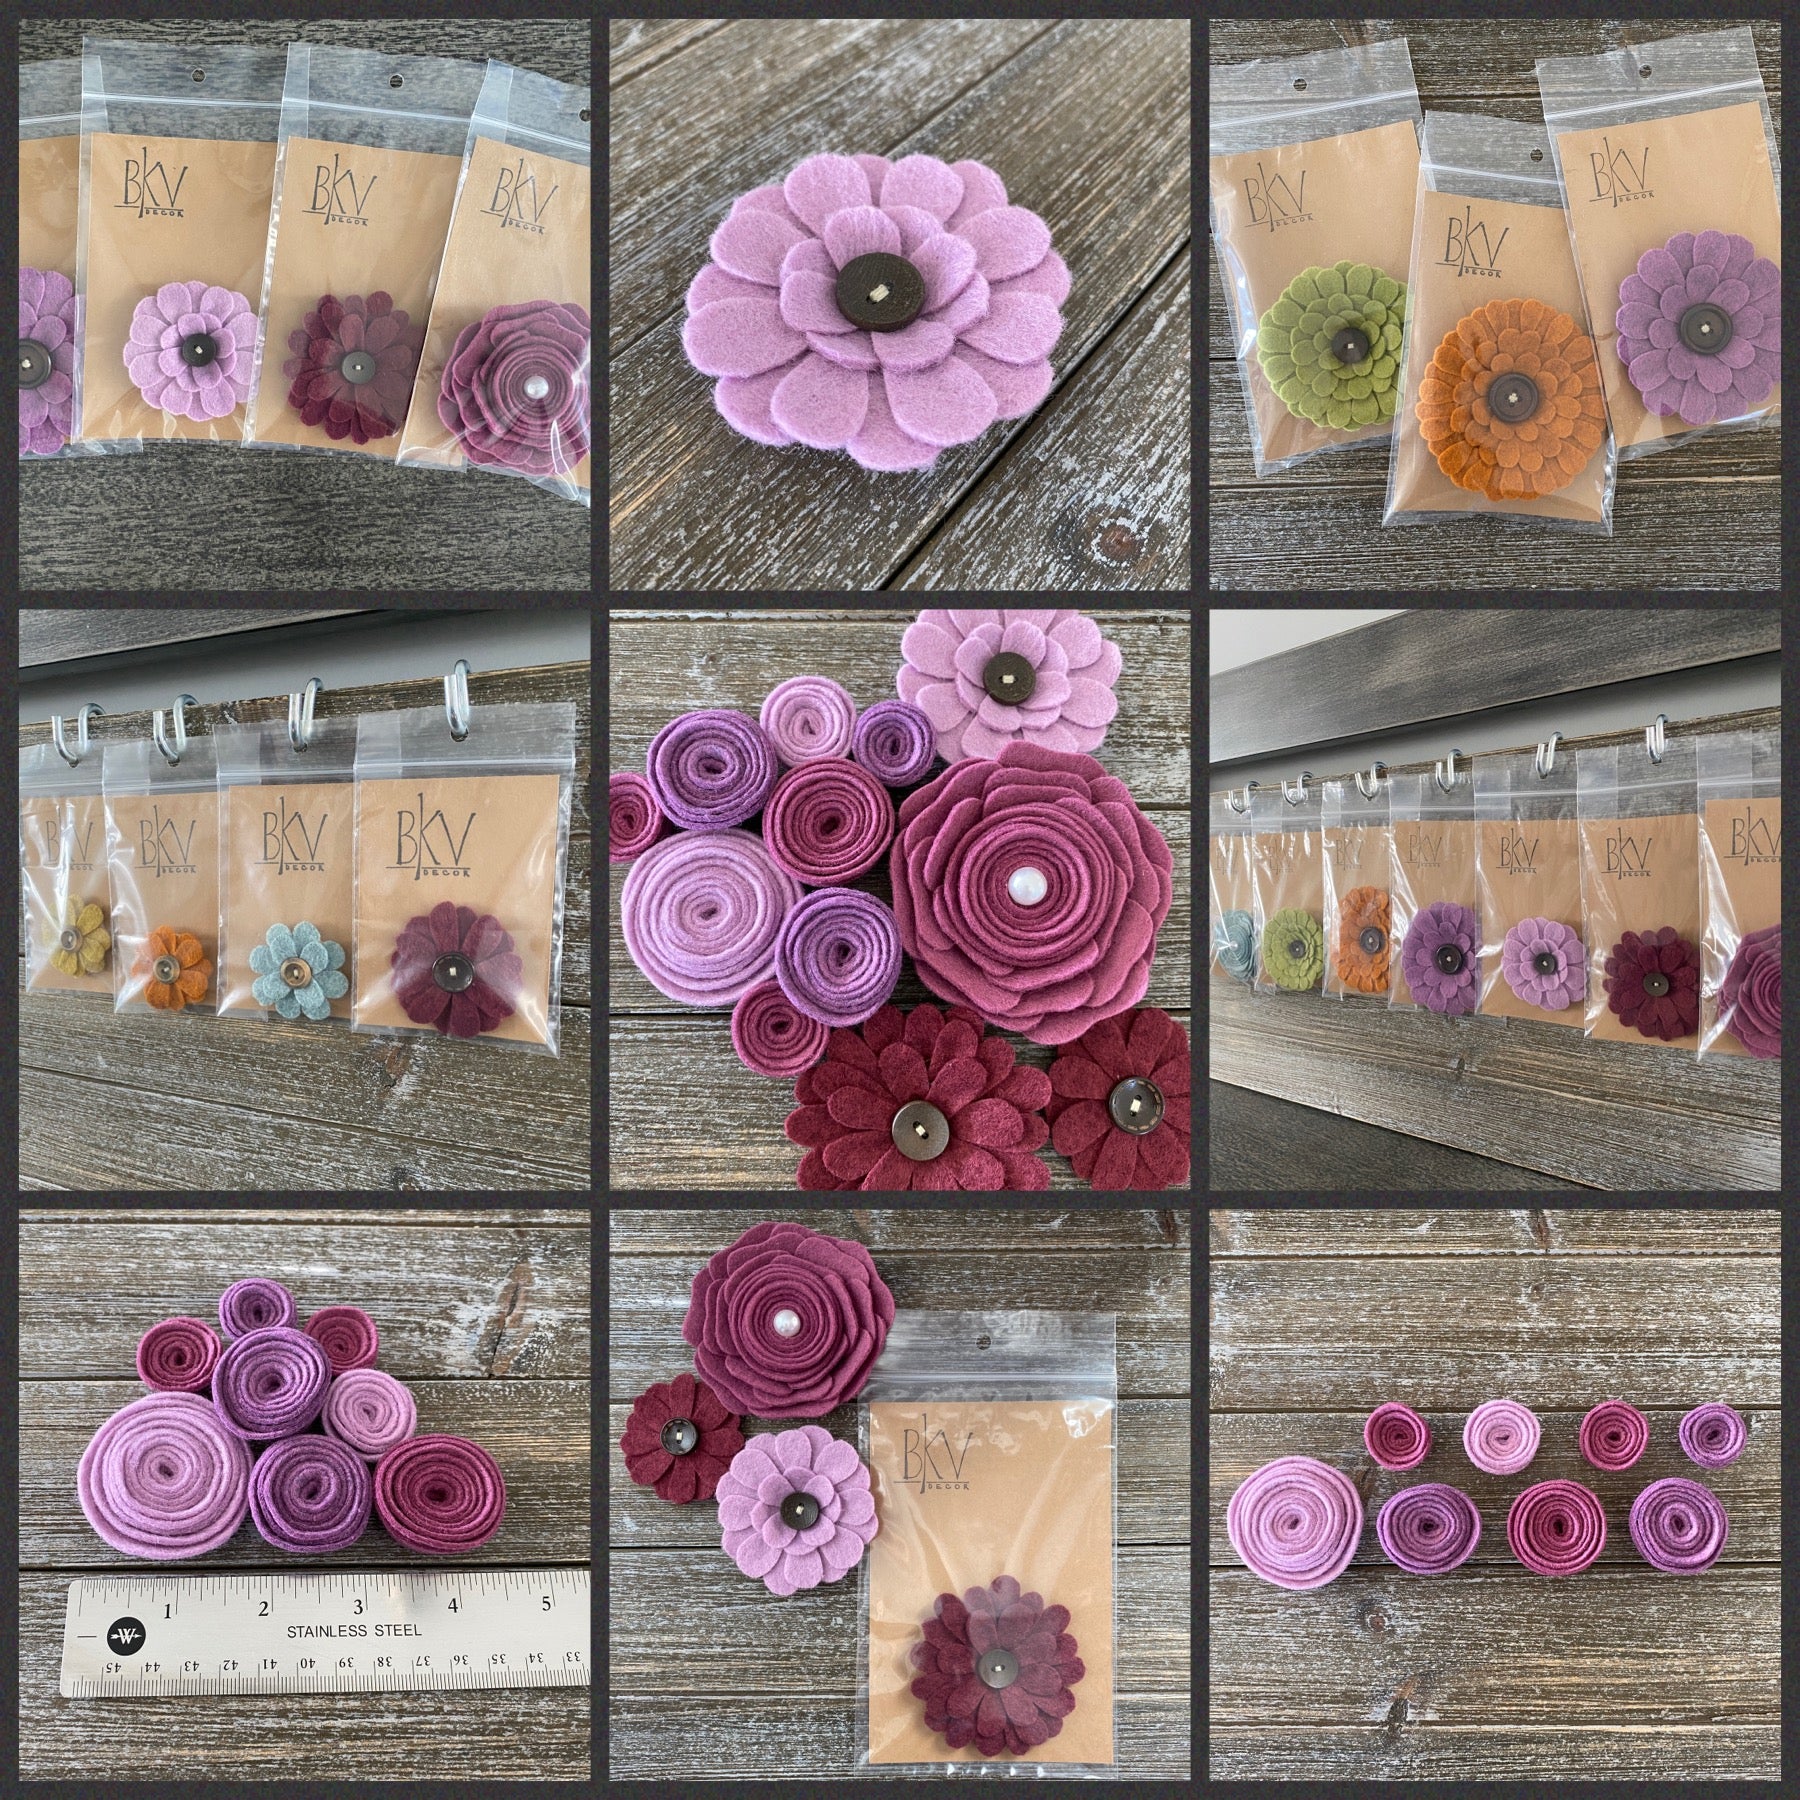 Felt Flower Embellishments for Crafts - Pink Flowers - Variety